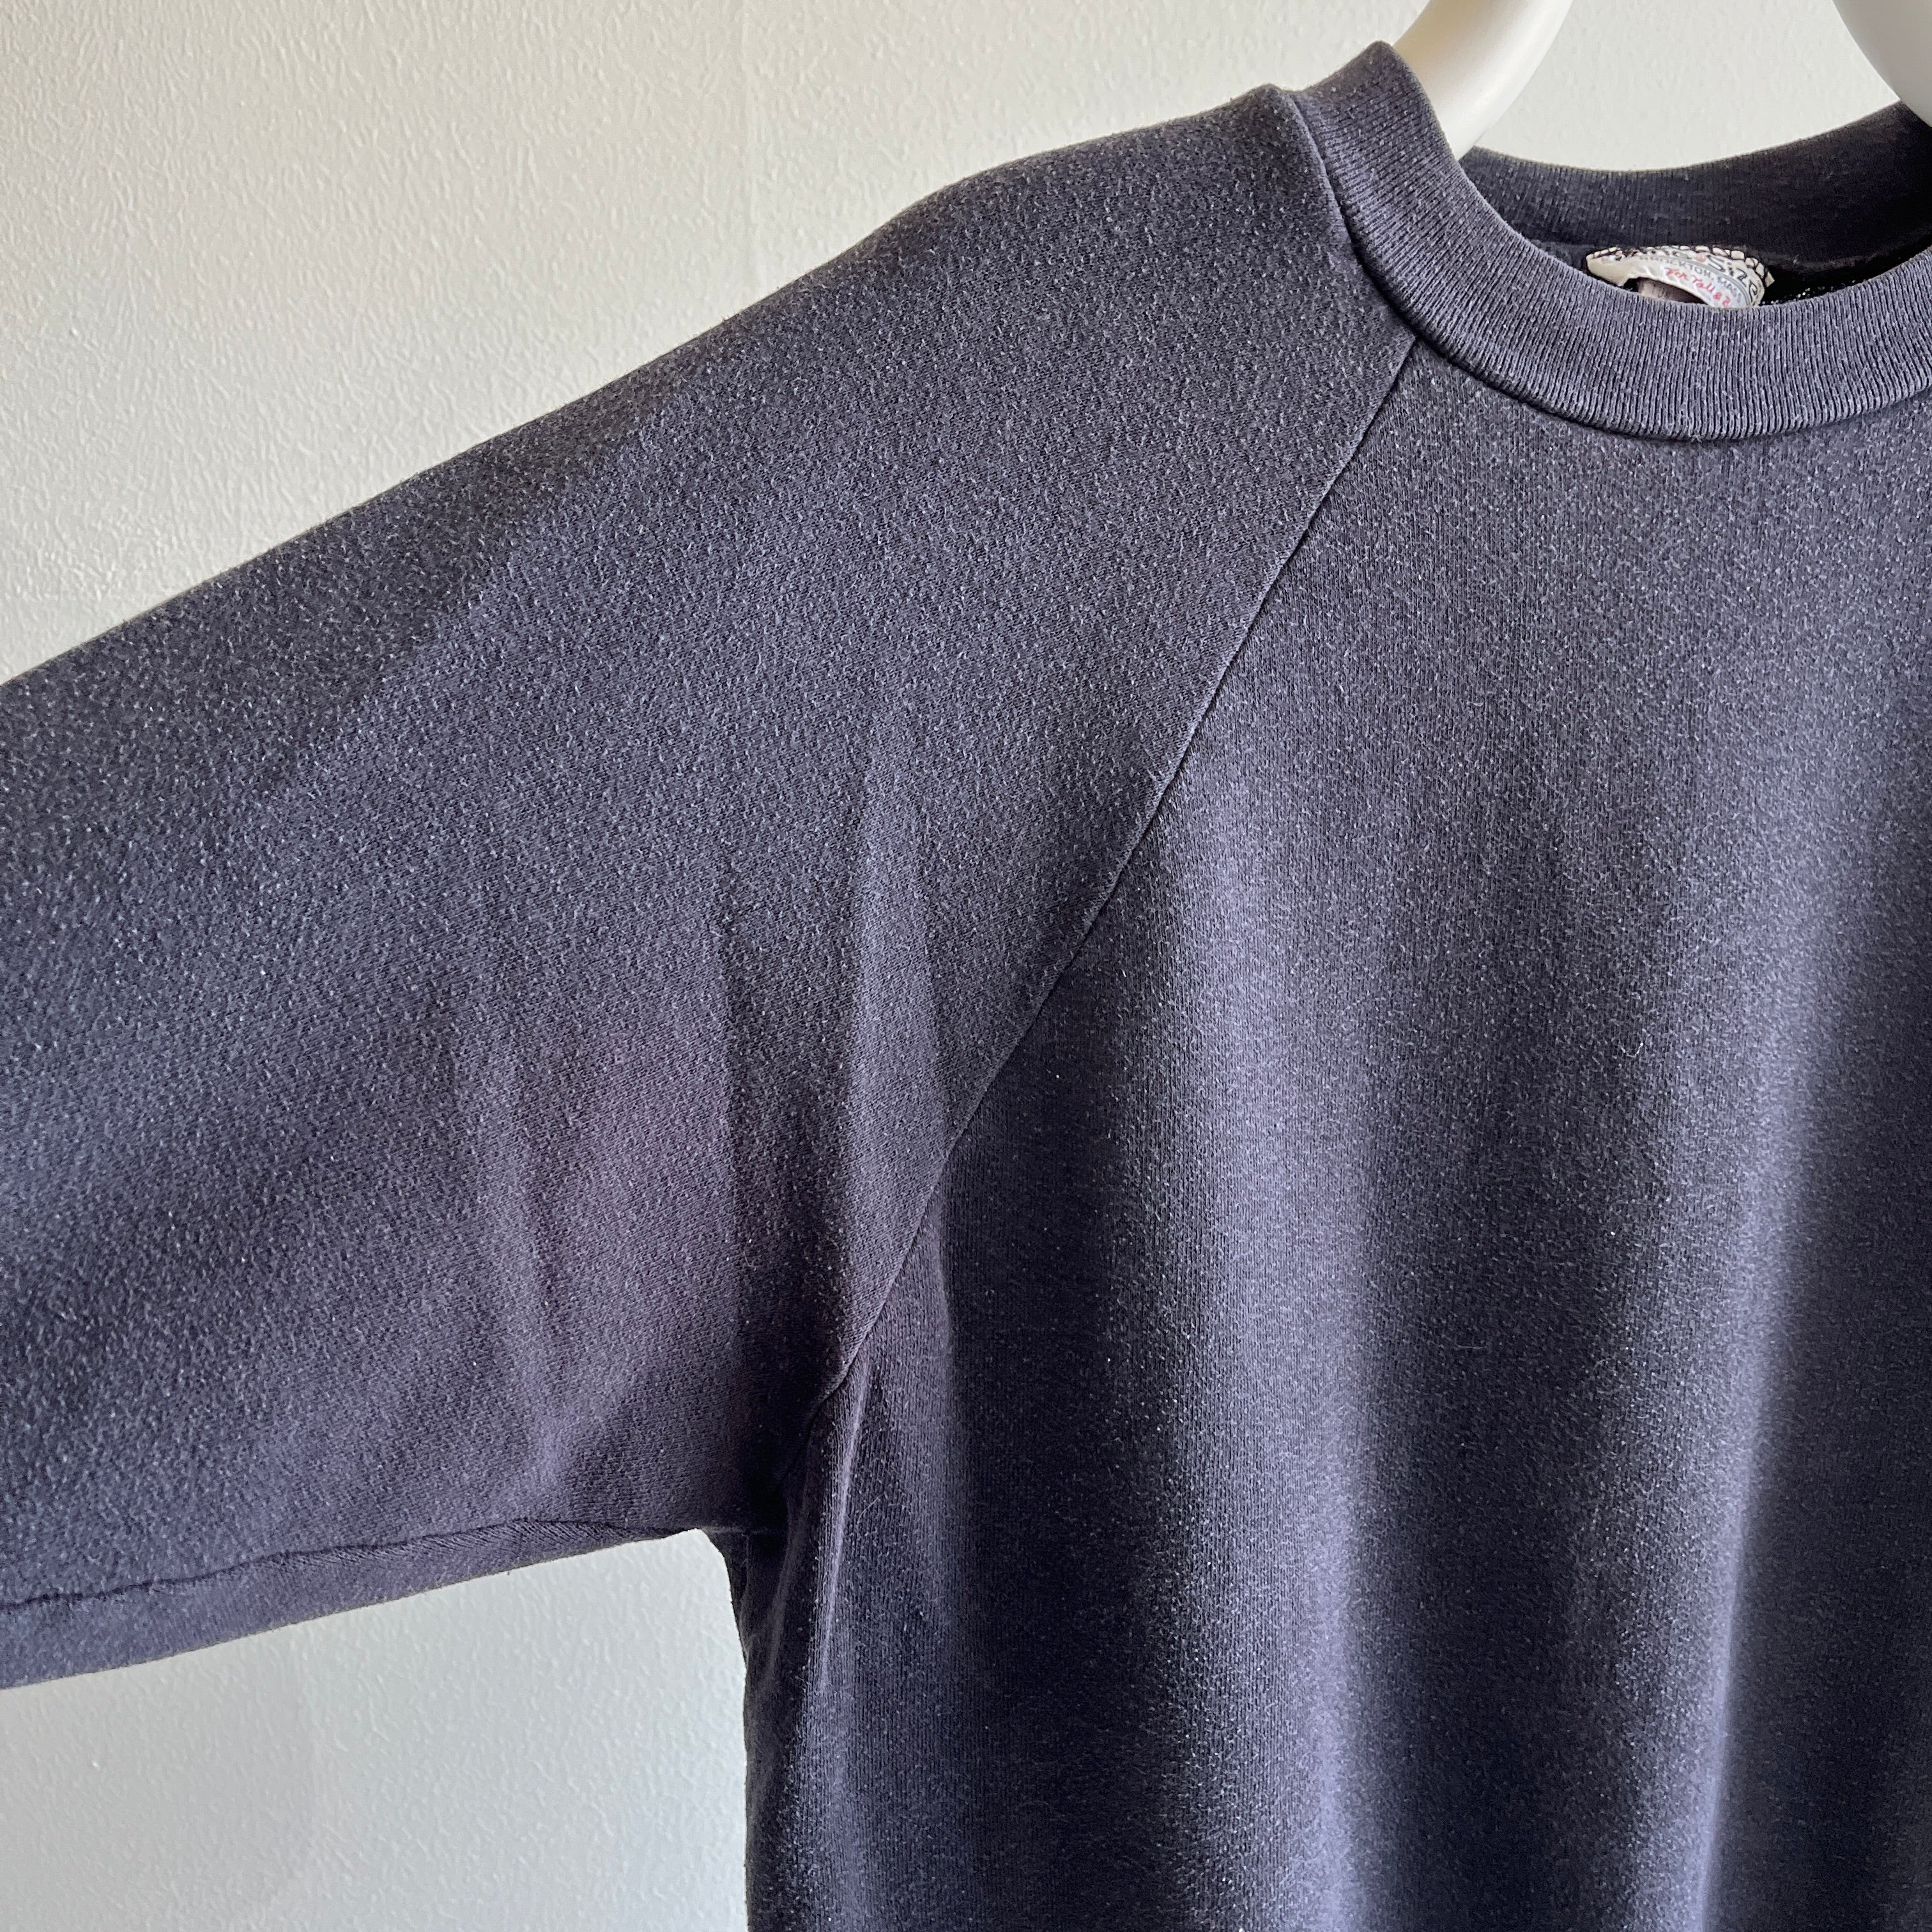 1980s Classic Faded Black to Gray Raglan Sweatshirt